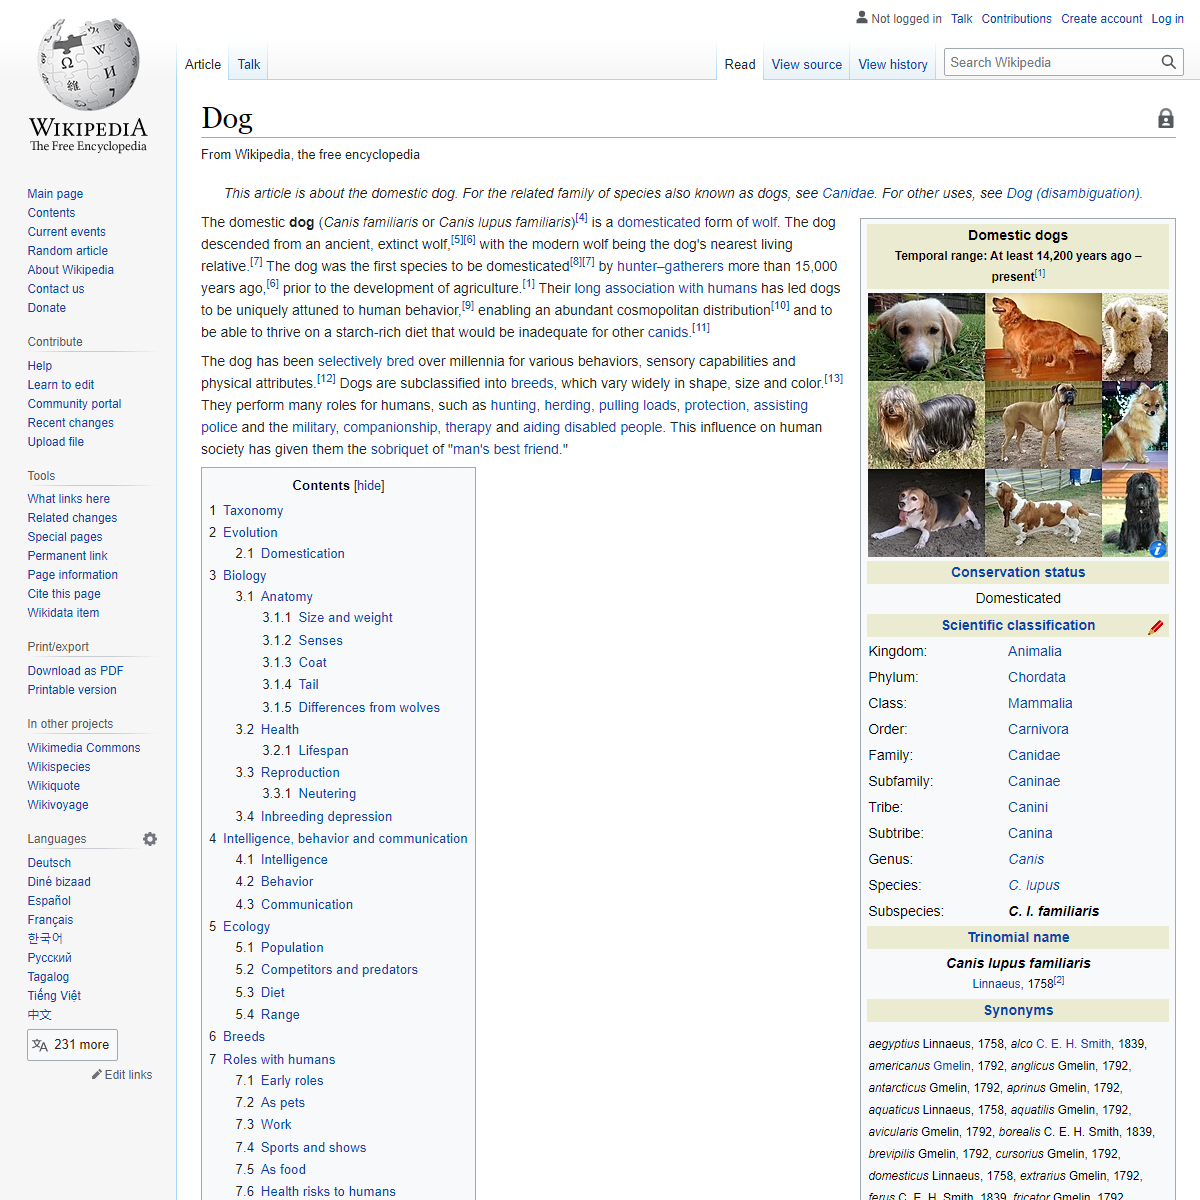 A complete backup of https://en.wikipedia.org/wiki/Dog